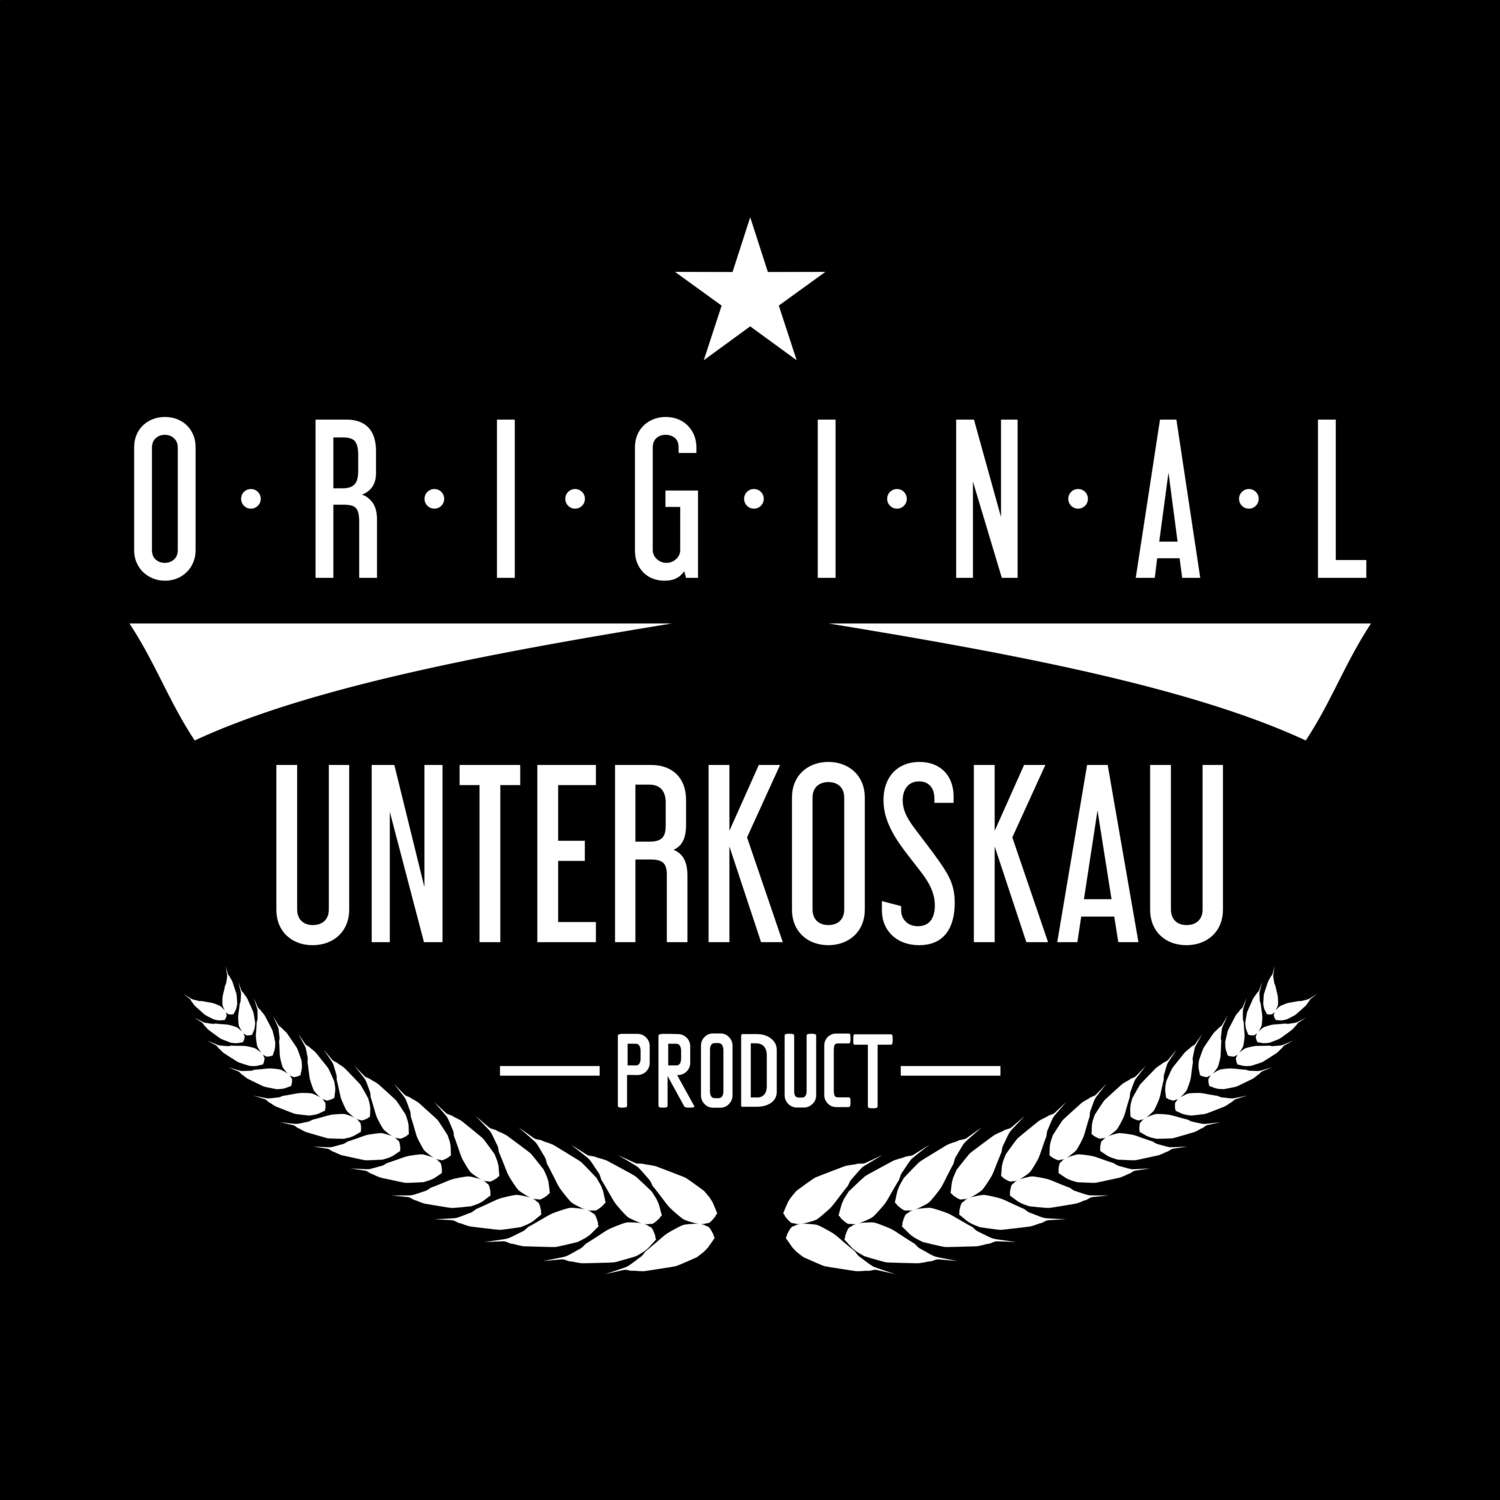 Unterkoskau T-Shirt »Original Product«